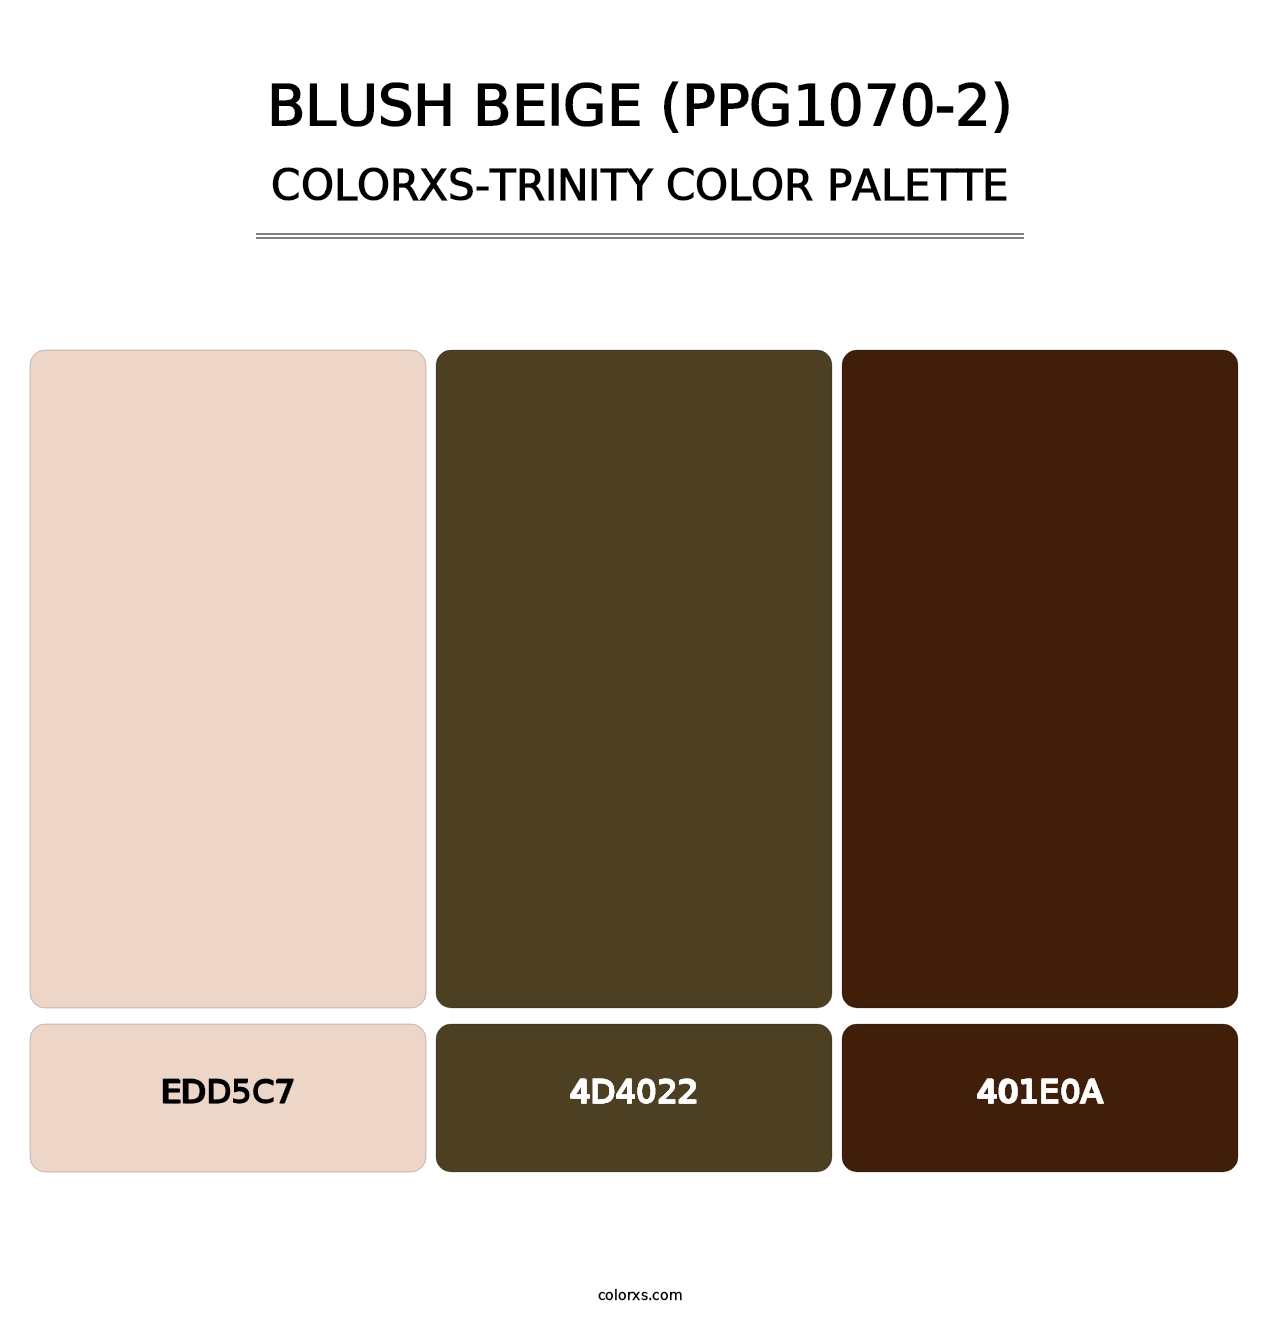 Blush Beige (PPG1070-2) - Colorxs Trinity Palette